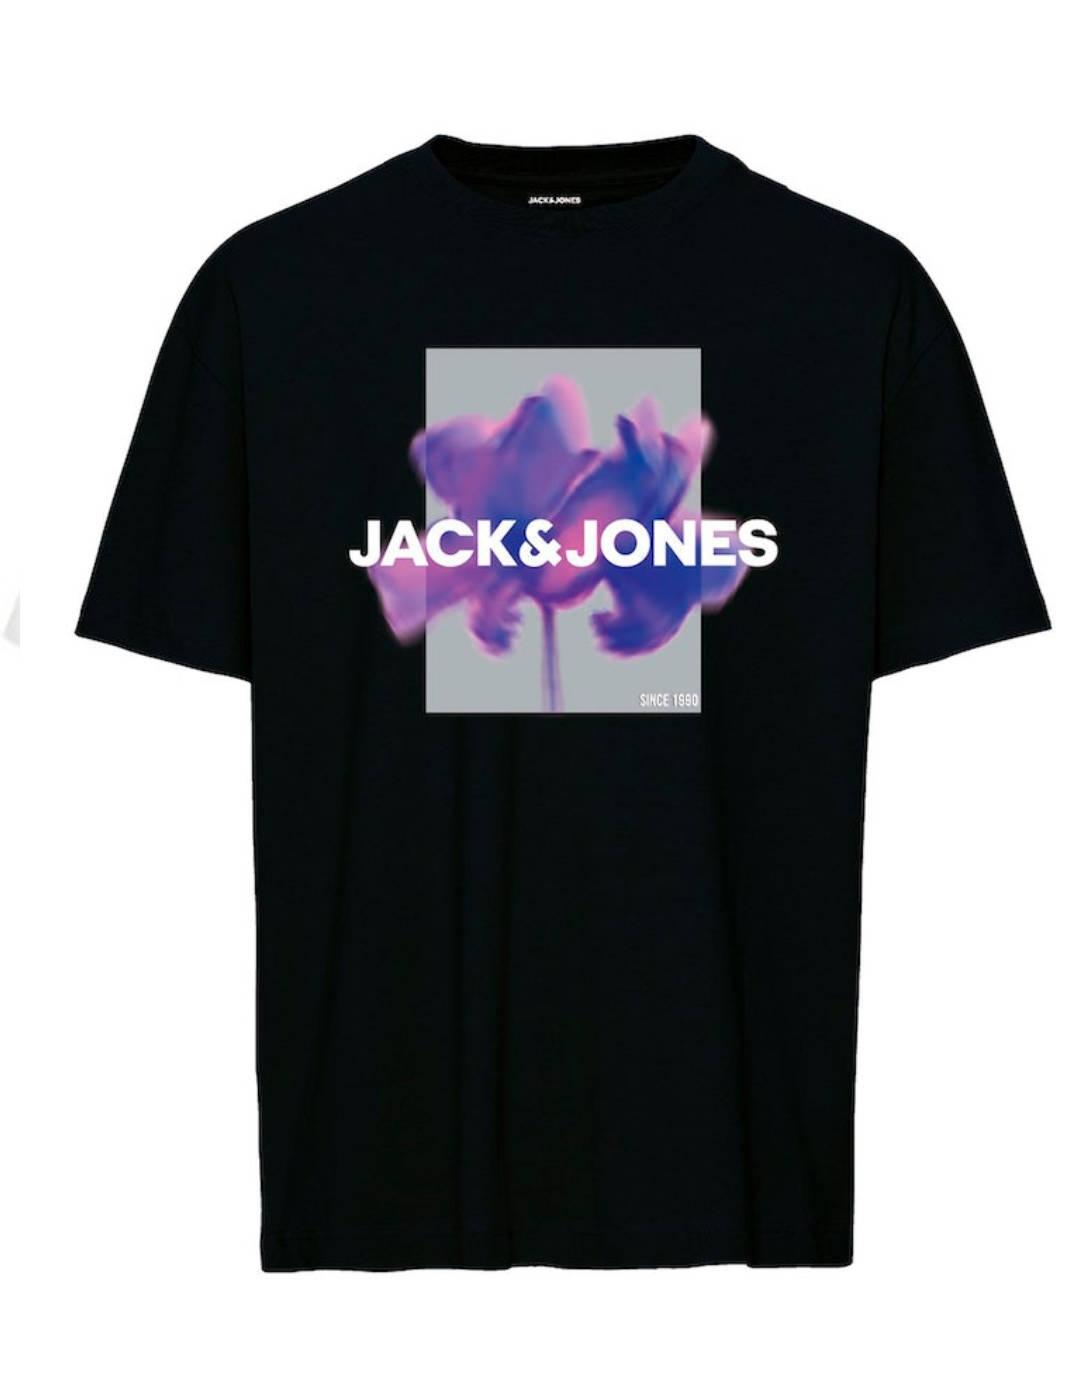 Camiseta Jack&Jones Florals negro manga corta para hombre